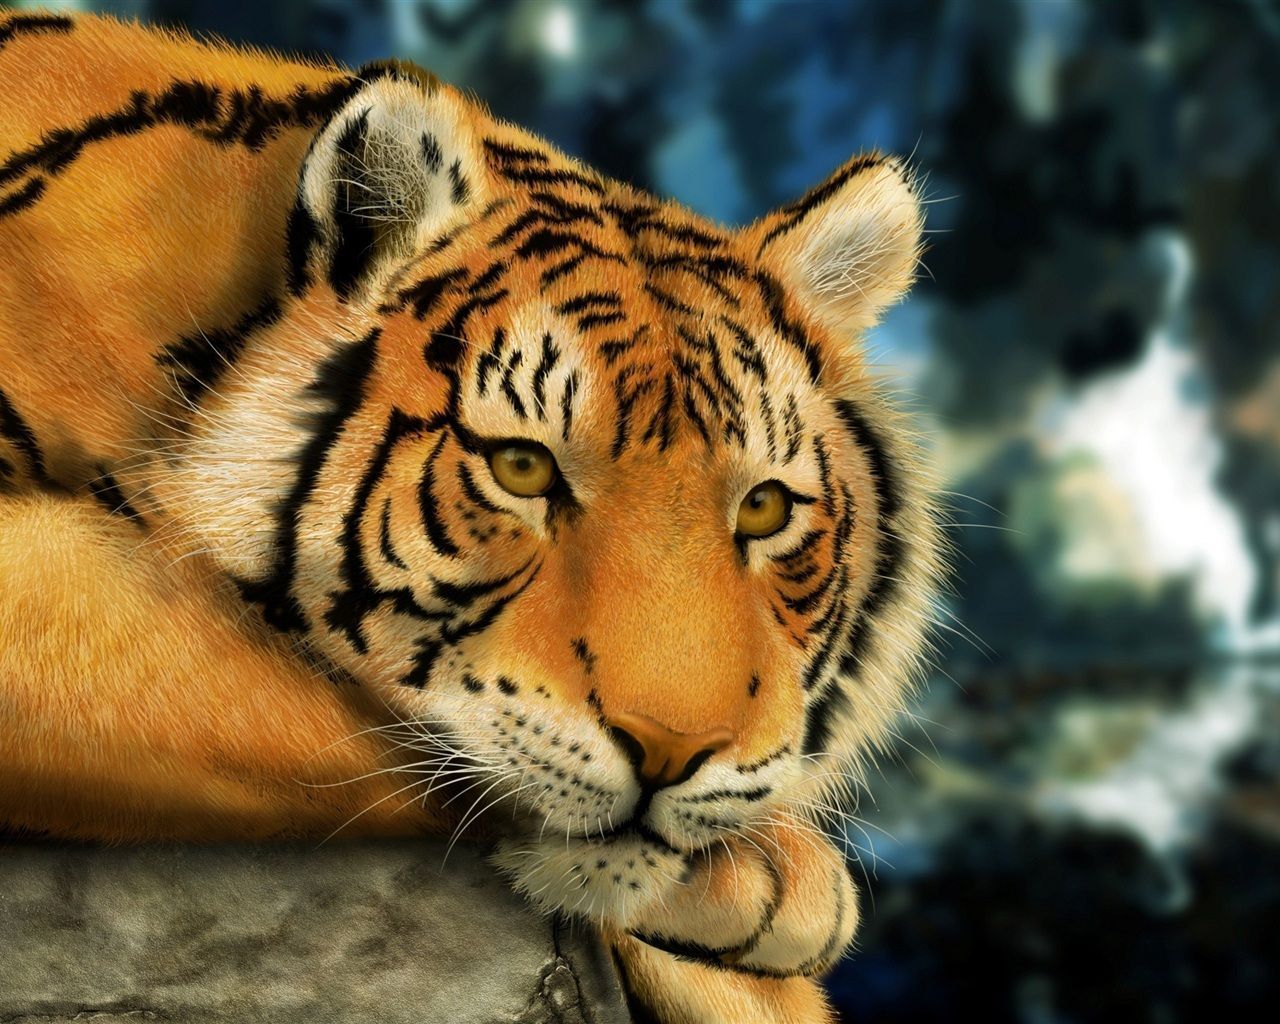 Thinking Tiger Wallpaper 1280x1024 resolution wallpaper download